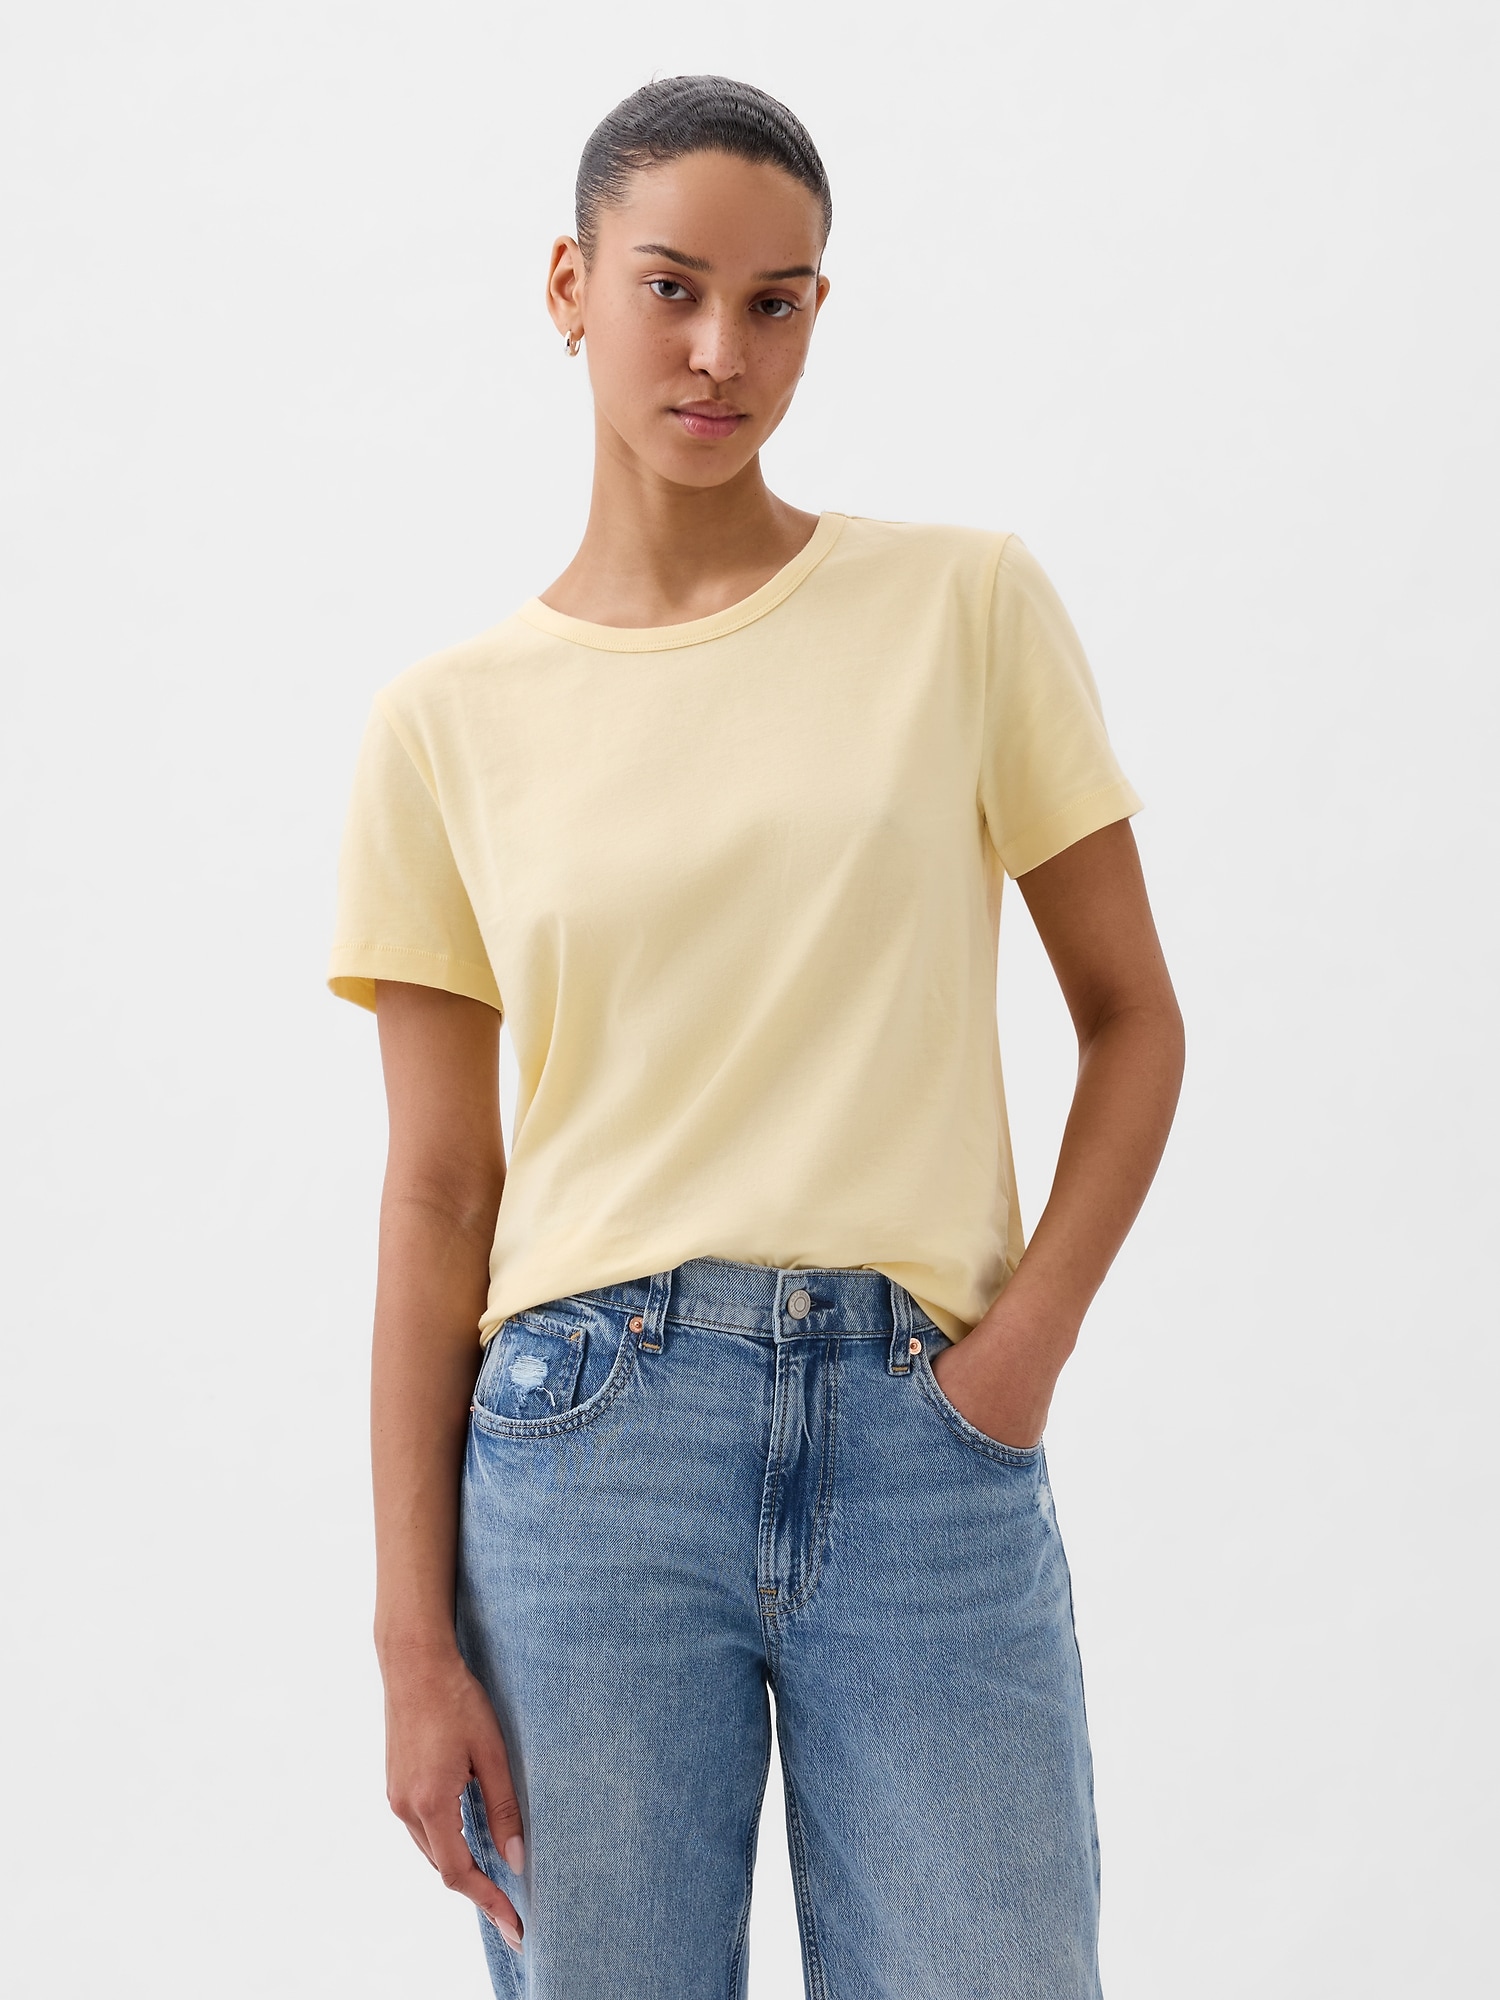 Gap Cotton Vintage Crewneck T-shirt In Maize Yellow